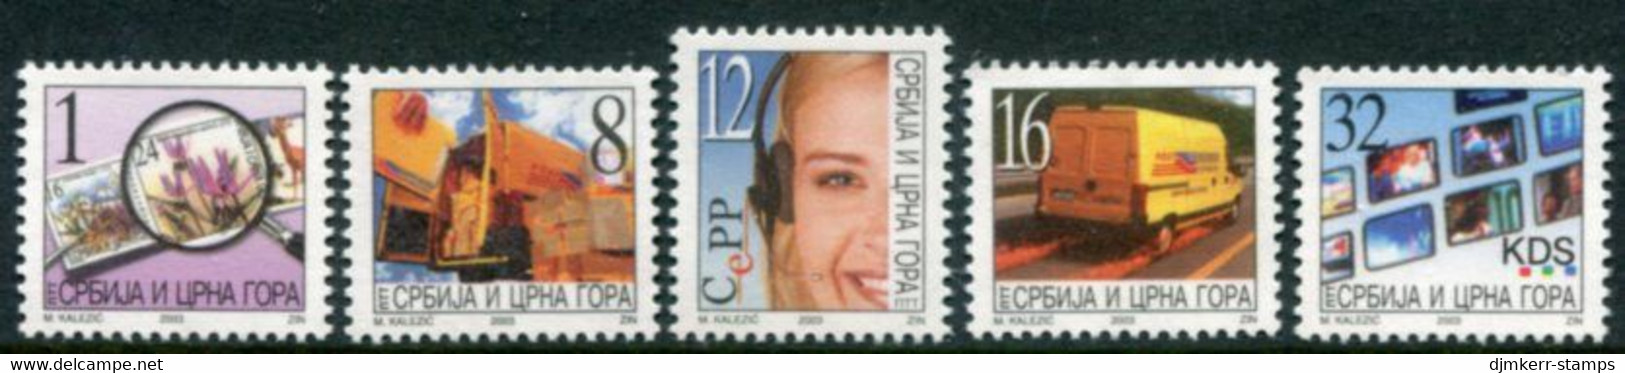 YUGOSLAVIA (Serbia & Montenegro) 2003 Definitive: Postal Services MNH / **  Michel 3133-37 - Unused Stamps